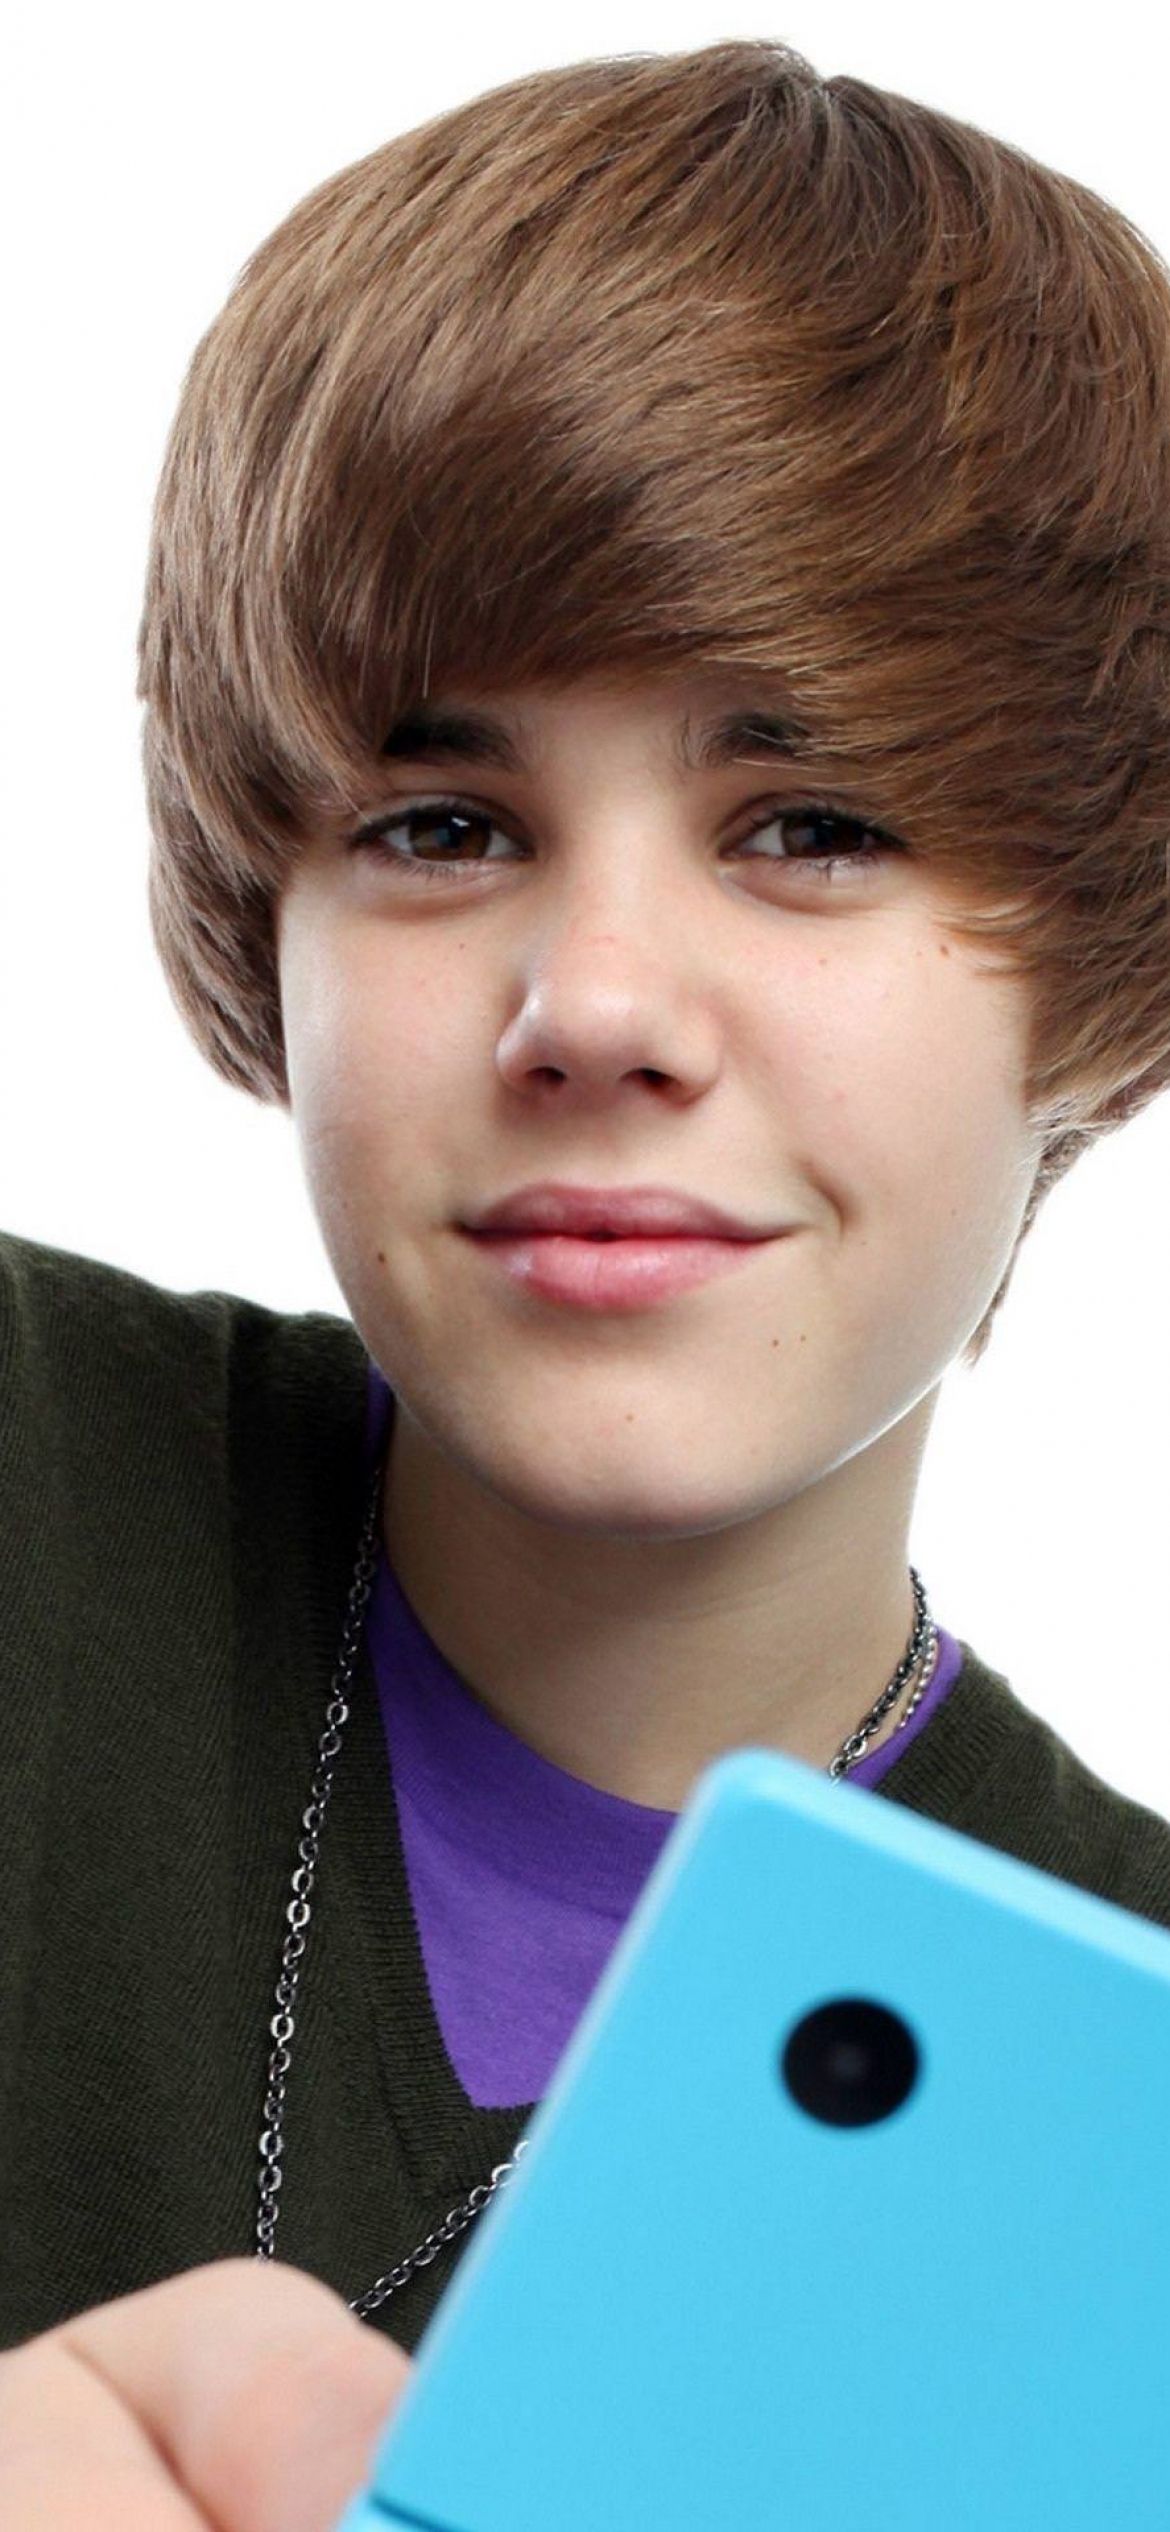 Download Justin Bieber 2020 HD Wallpapers Wallpaper 